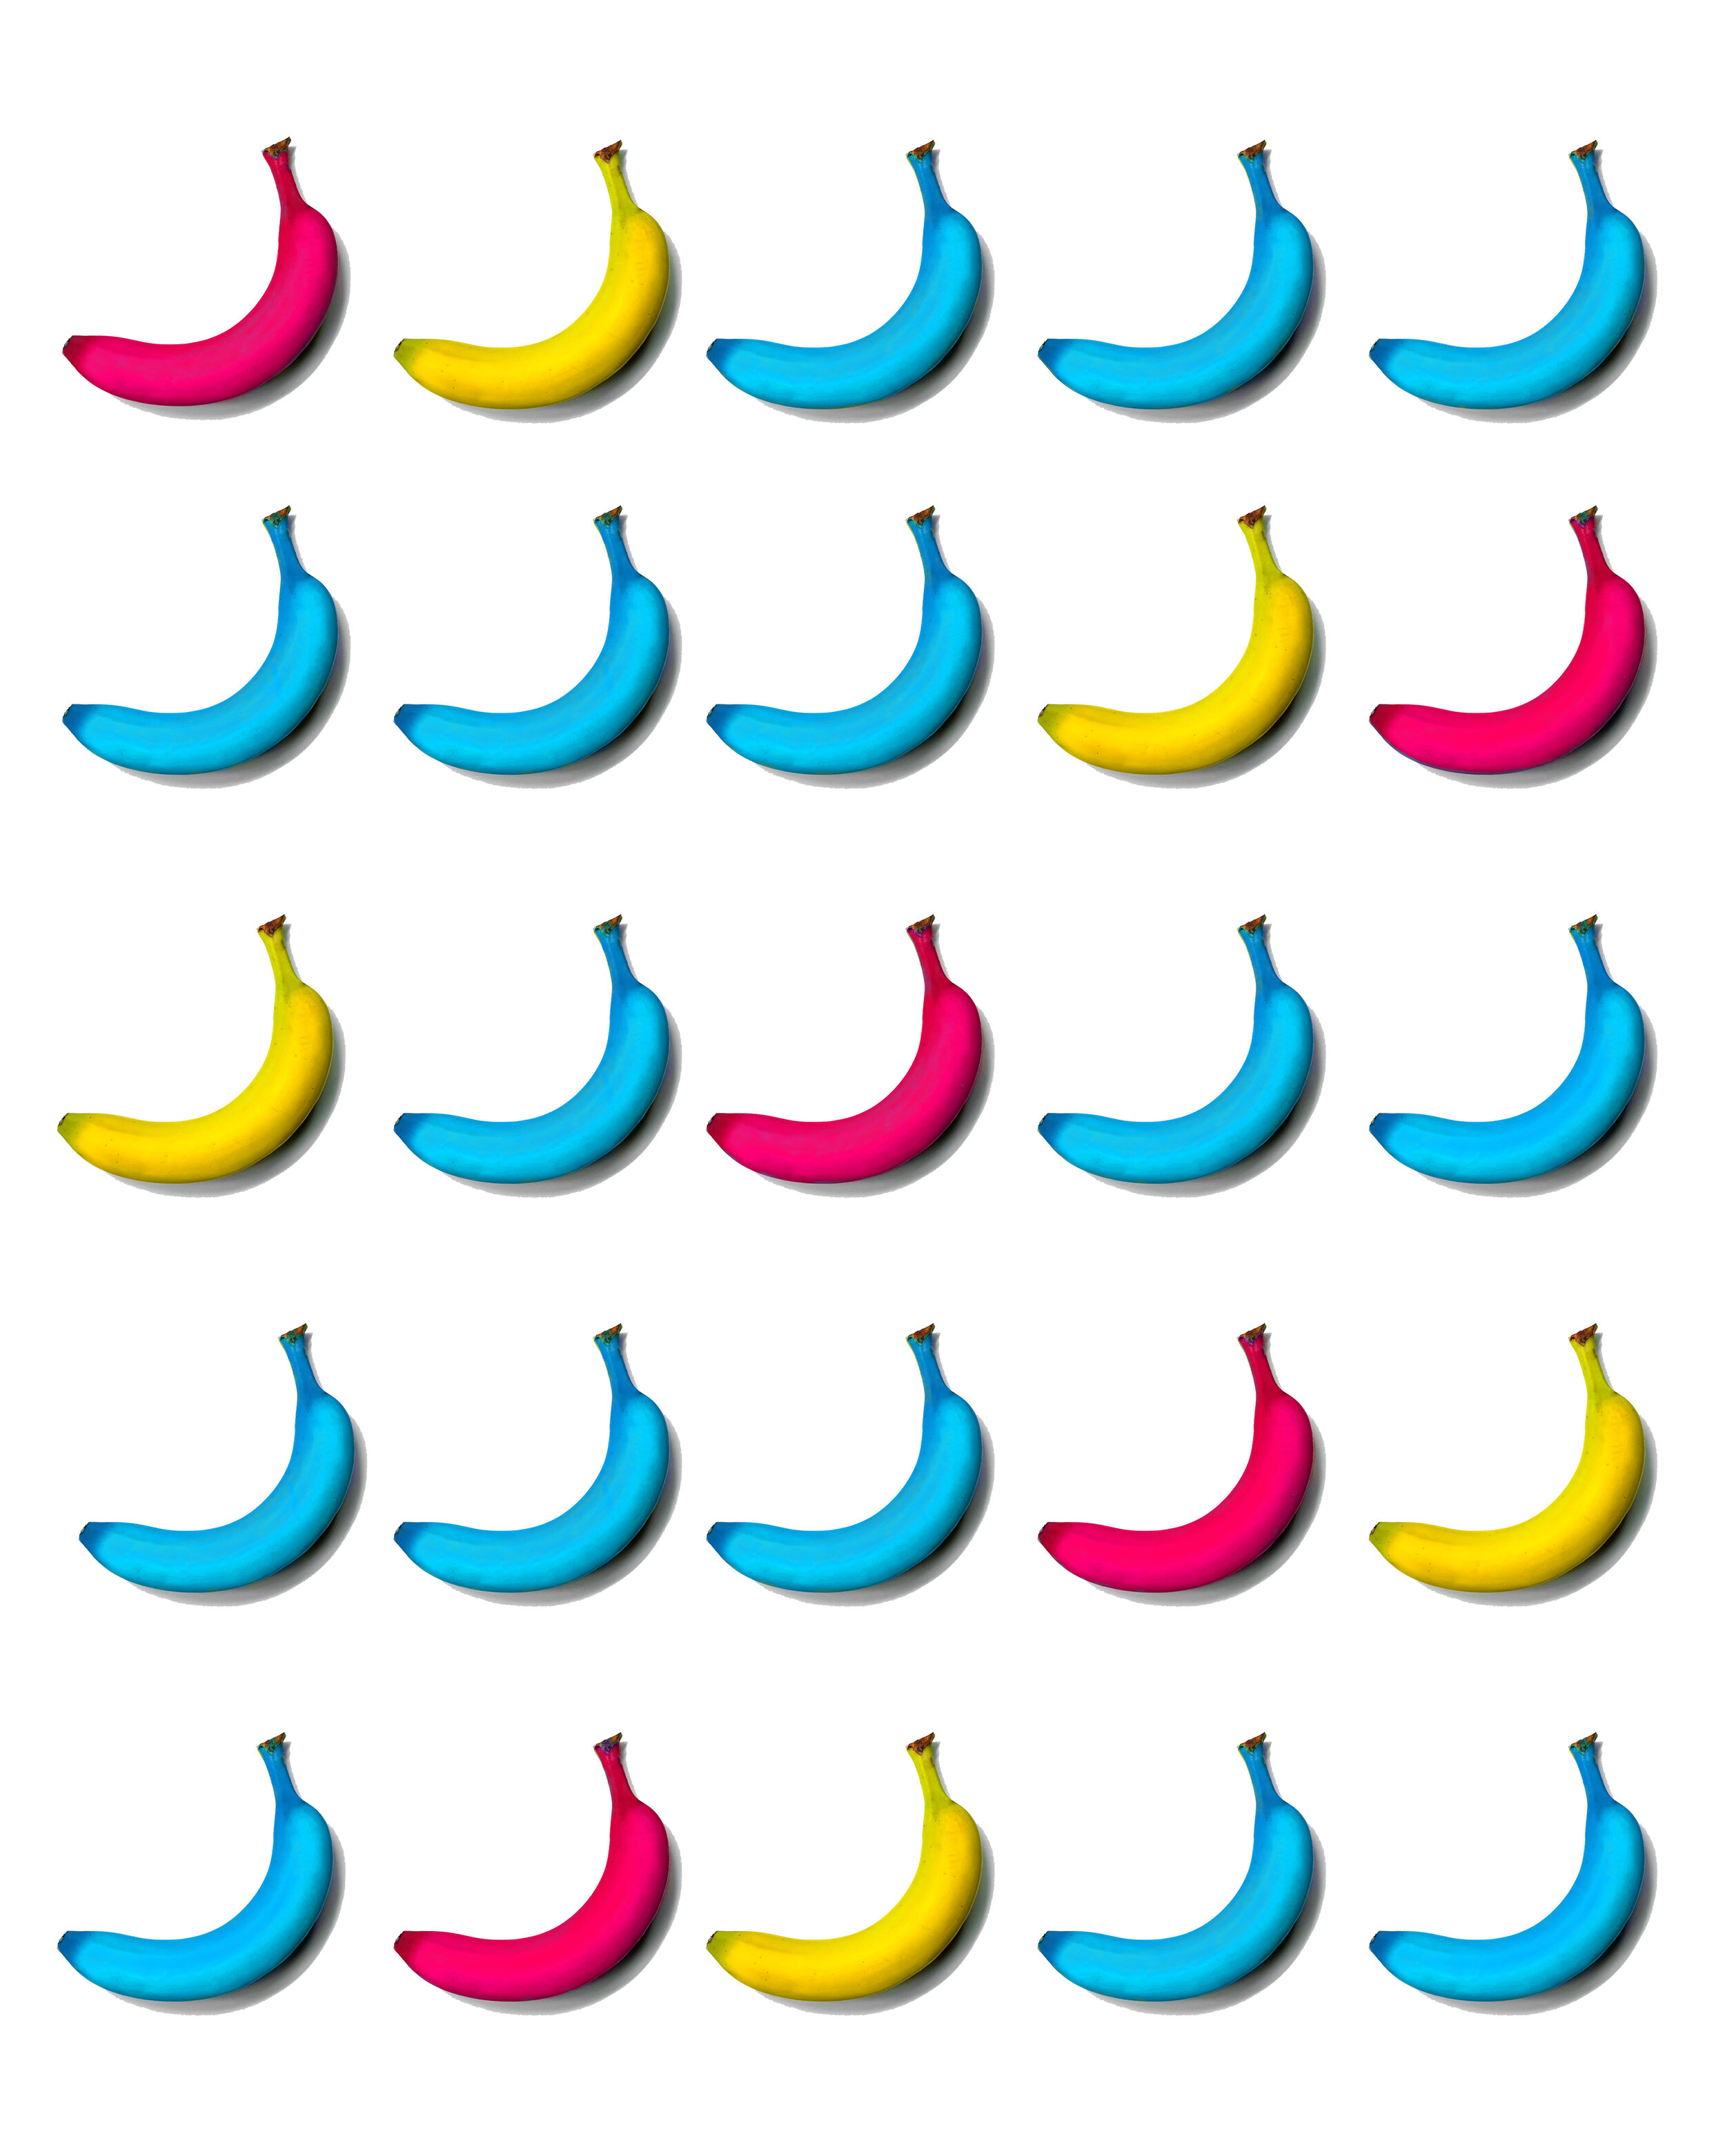 banana-9312-colors.jpg